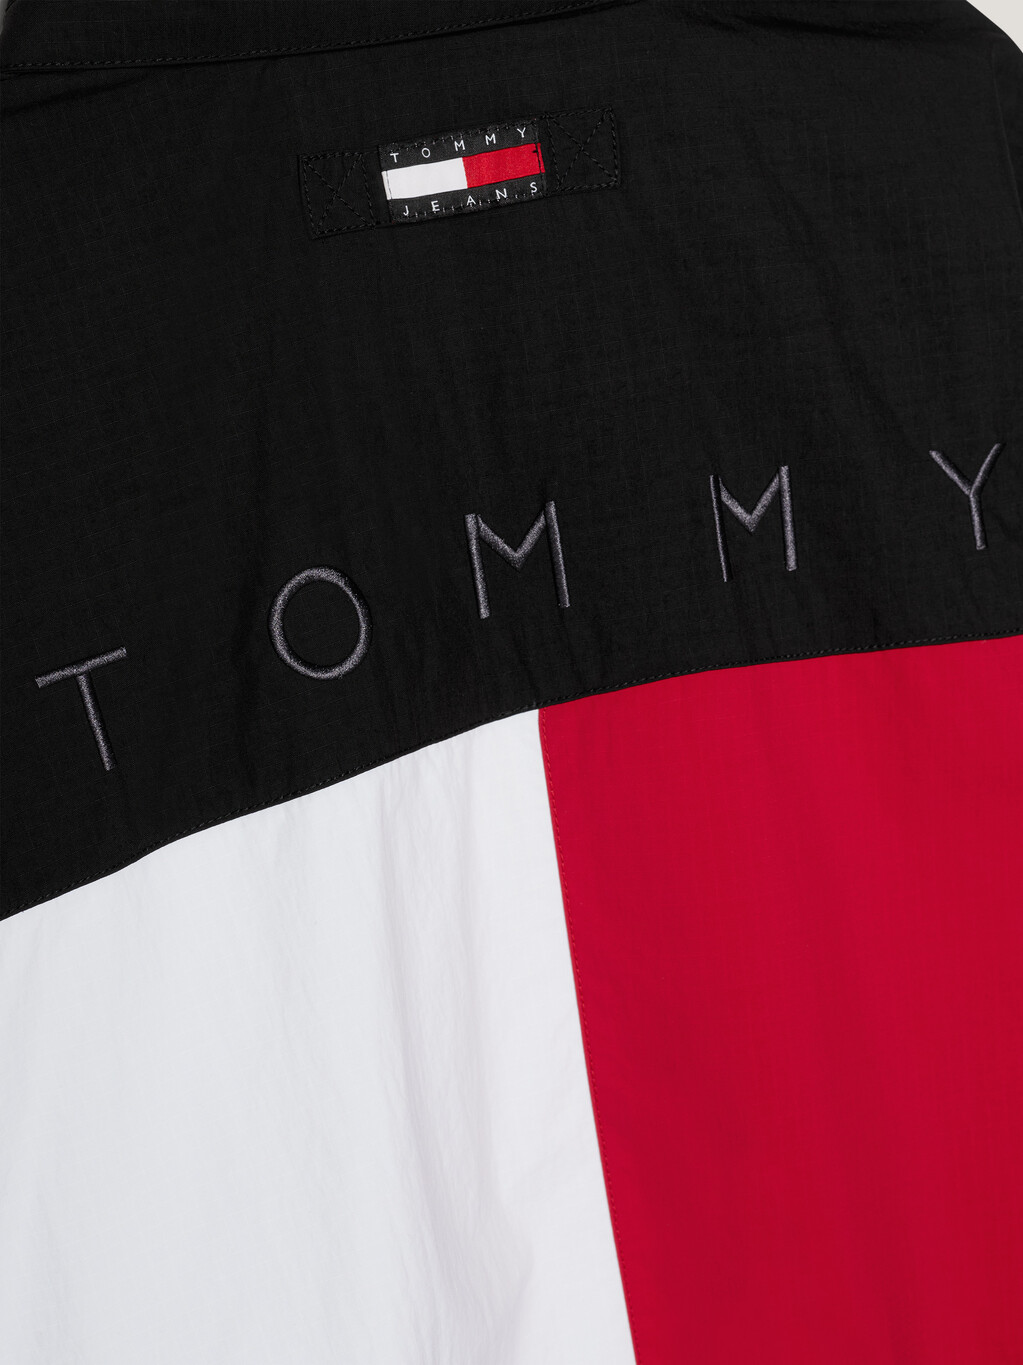 Tommy Remastered Dual Gender Signature Colour-Blocked Jacket, Black / Multi, hi-res